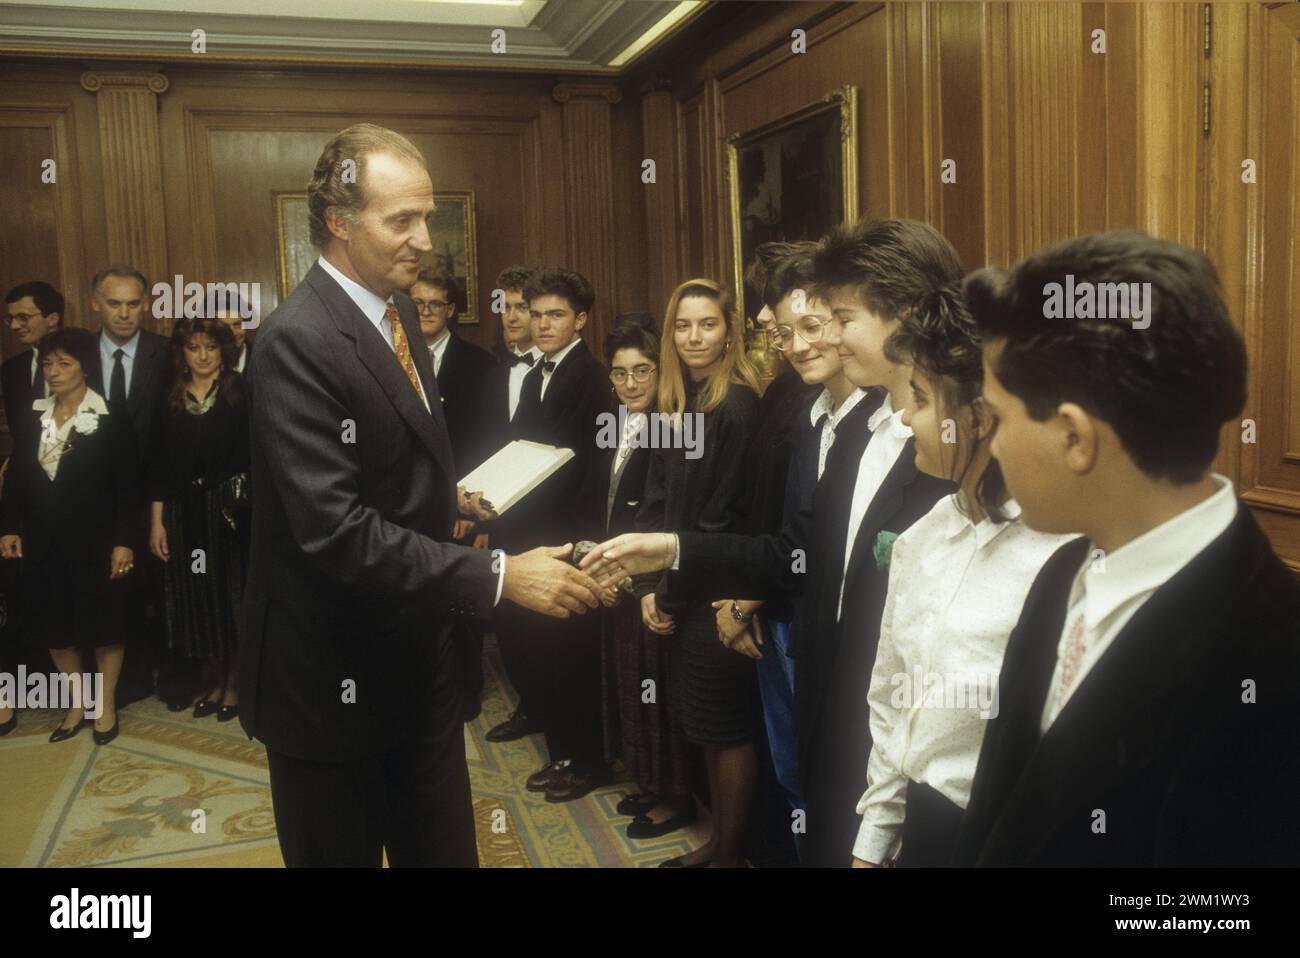 MME4736128 Palace of Zarzuela (Madrid). King Juan Carlos of Spain (1989)/Palazzo della Zarzuela (Madrid). Il re Juan Carlos di Spagna (1989) -; (add.info.: Palace of Zarzuela (Madrid). King Juan Carlos of Spain (1989)/Palazzo della Zarzuela (Madrid). Il re Juan Carlos di Spagna (1989) -); © Marcello Mencarini. All rights reserved 2024. Stock Photo